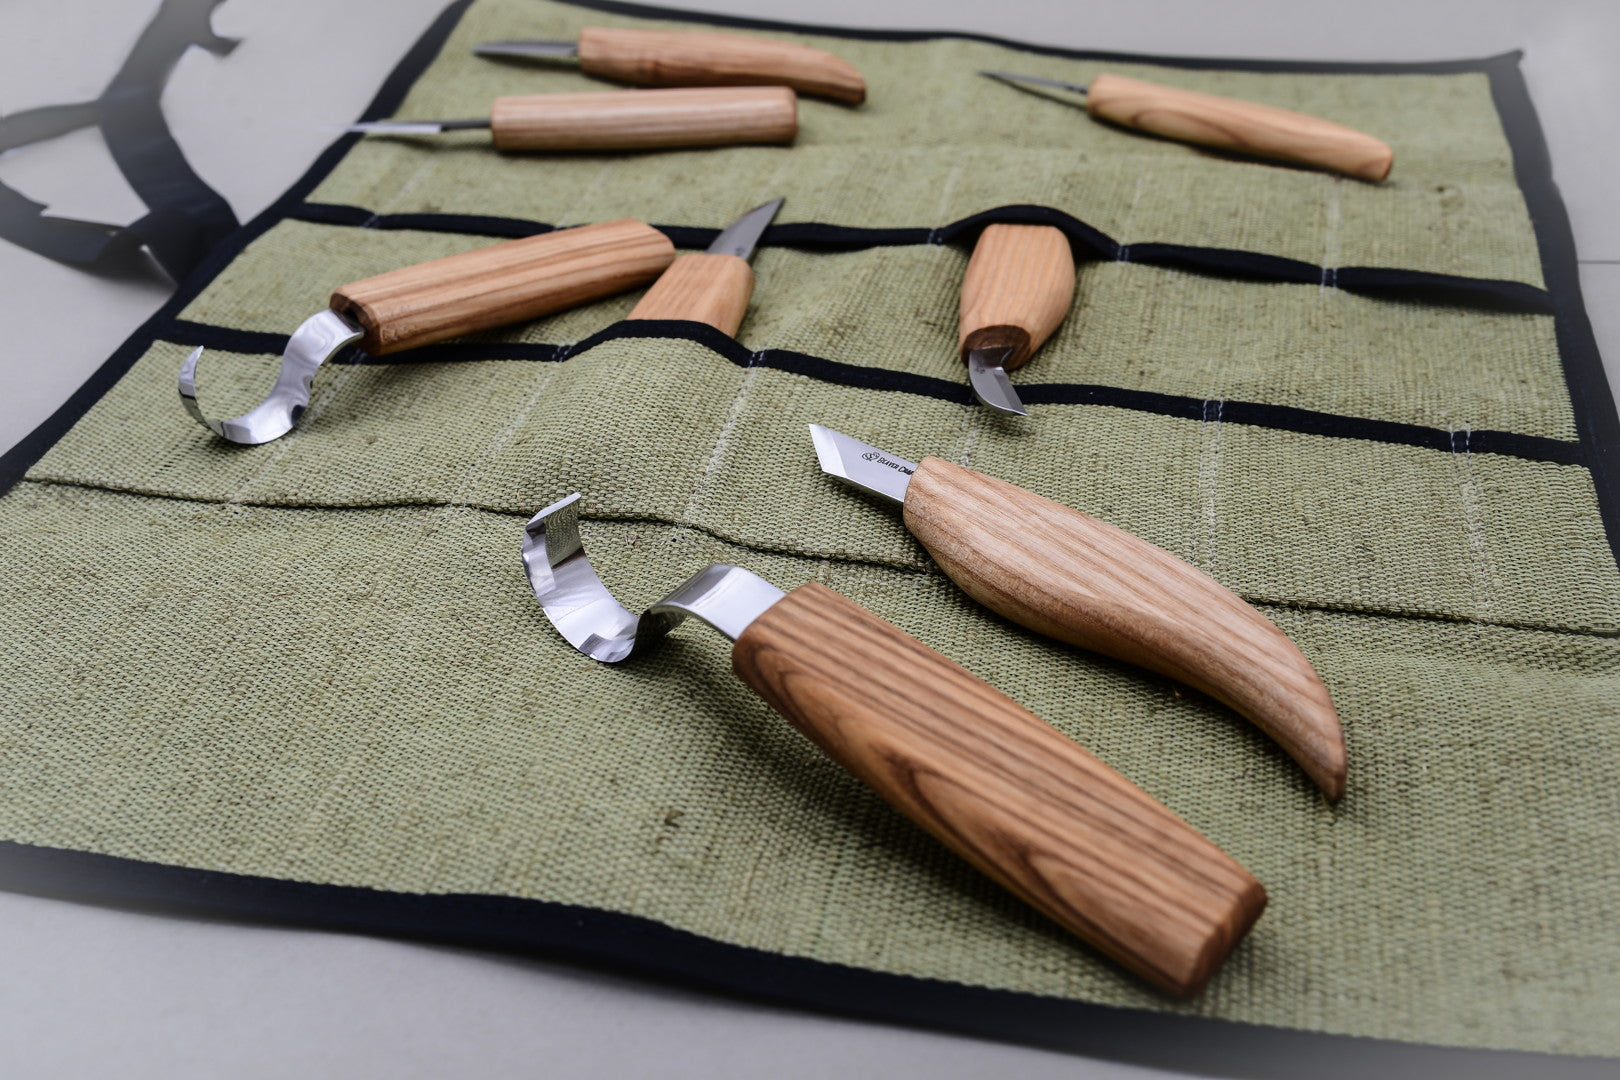 BeaverCraft Wood Carving Set of 8 Knives